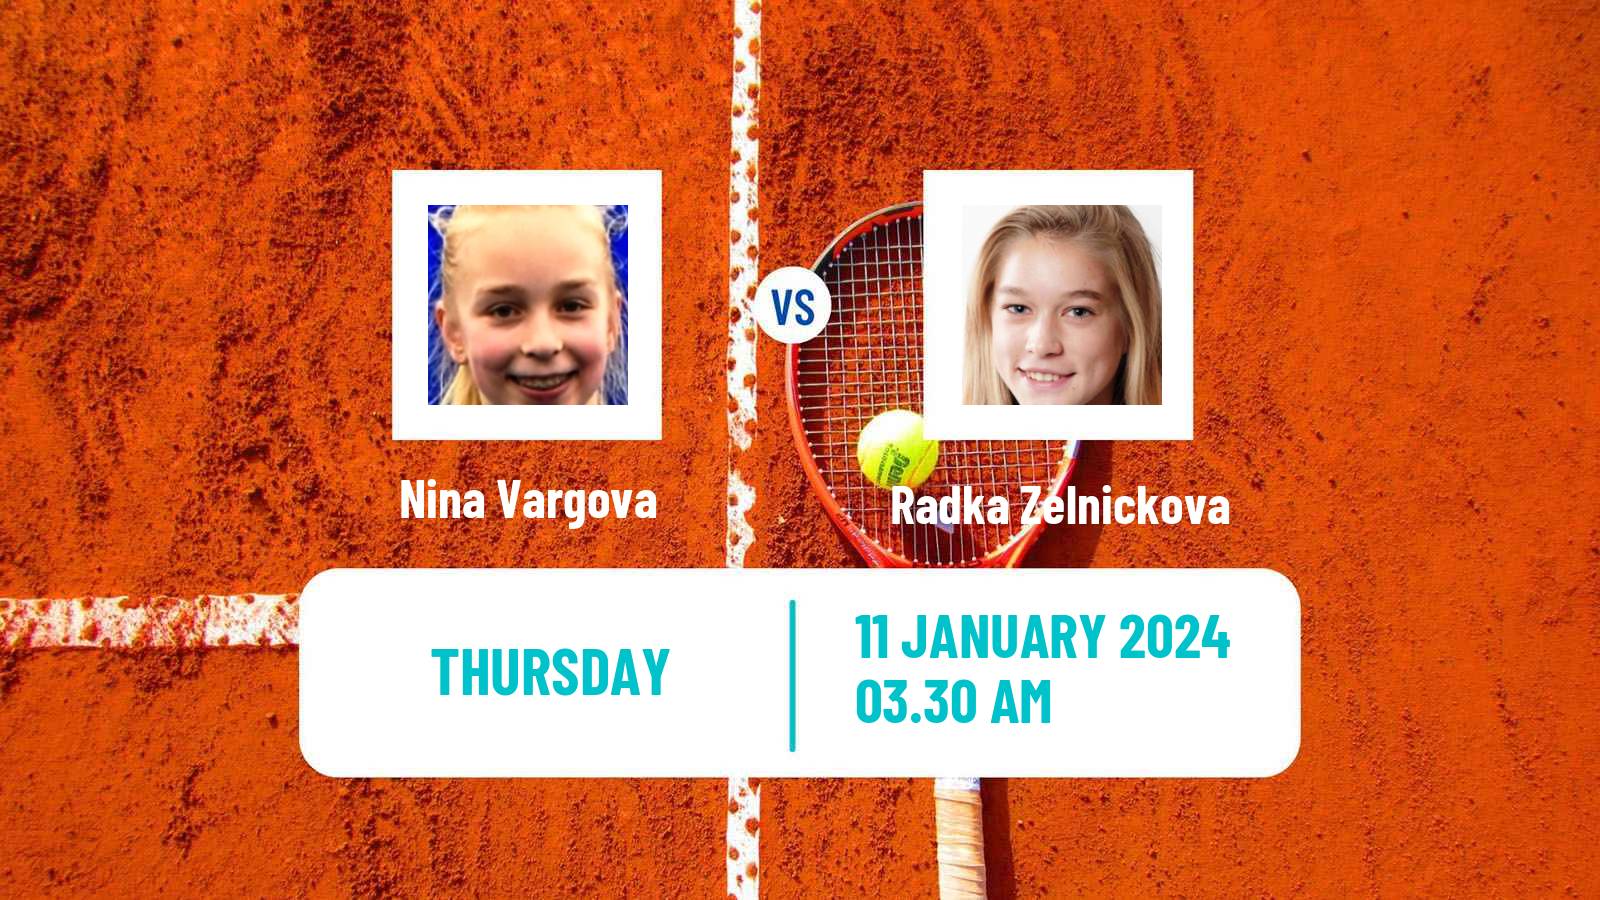 Tennis ITF W15 Monastir 2 Women Nina Vargova - Radka Zelnickova